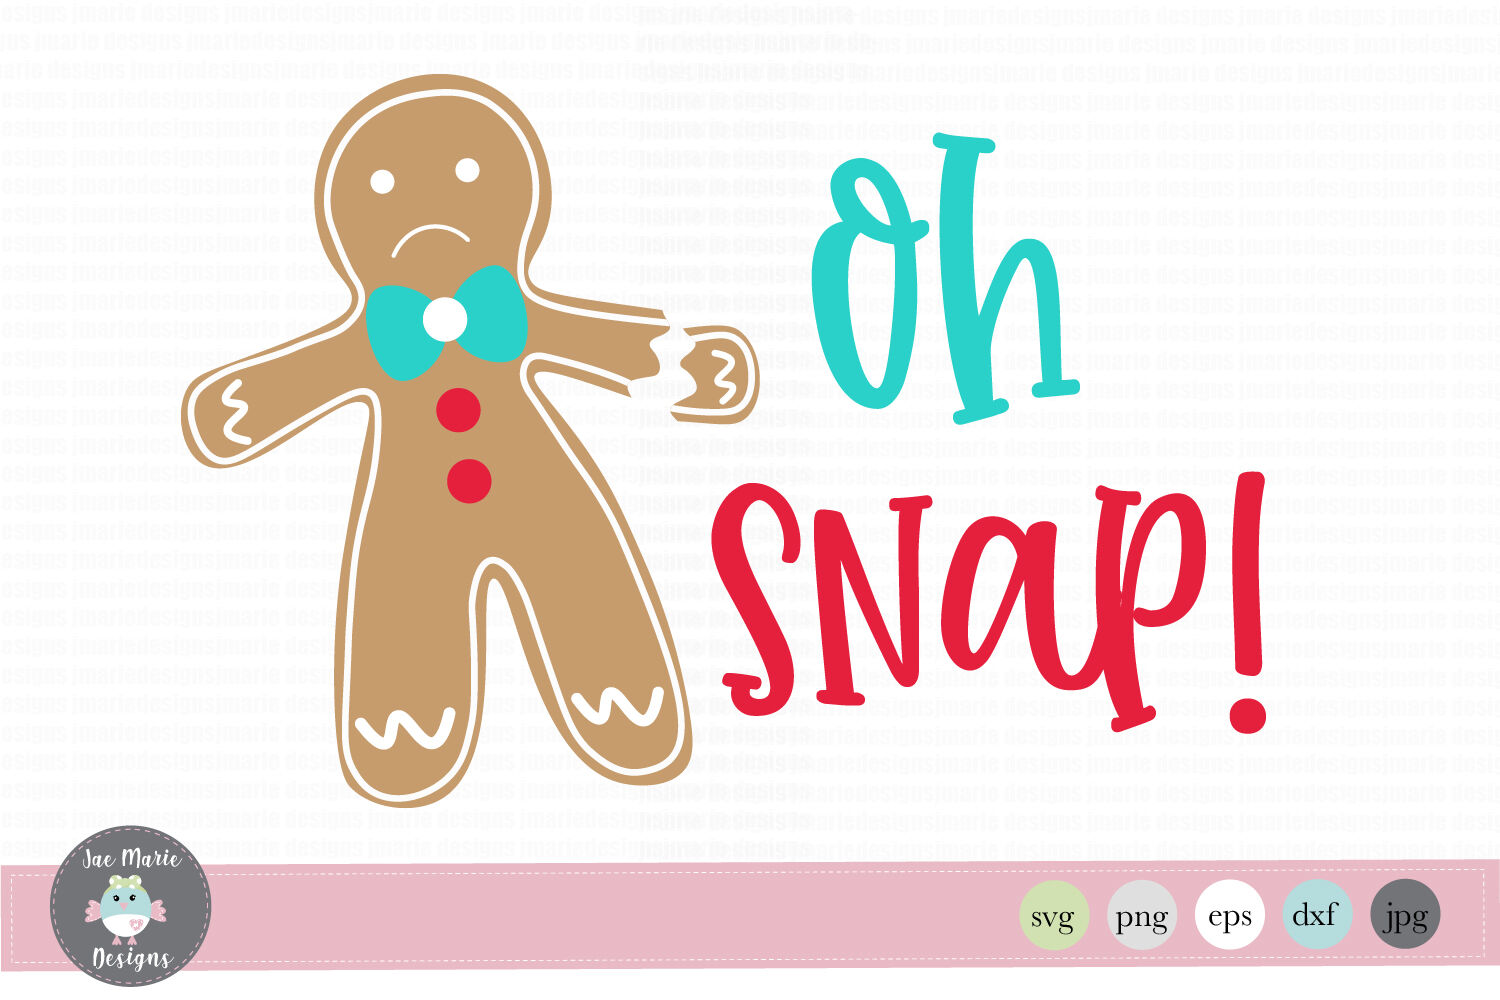 Oh Snap Christmas Svg Christmas Svg Files Christmas Clipart By Jae Marie Digital Designs Thehungryjpeg Com